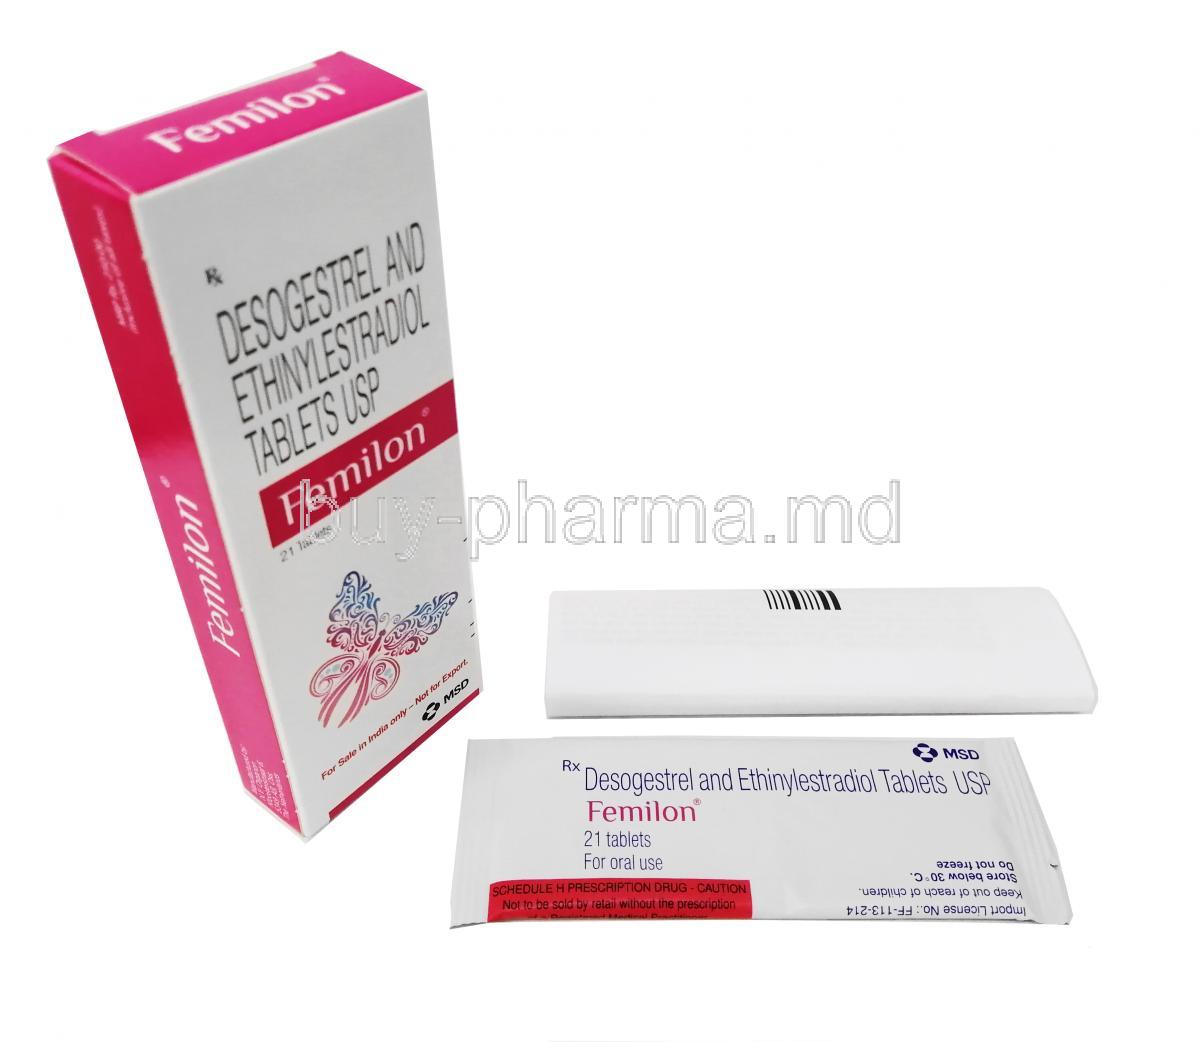 Femilon, Ethinyl Estradiol and Desogestrel box, leaflet and tablet